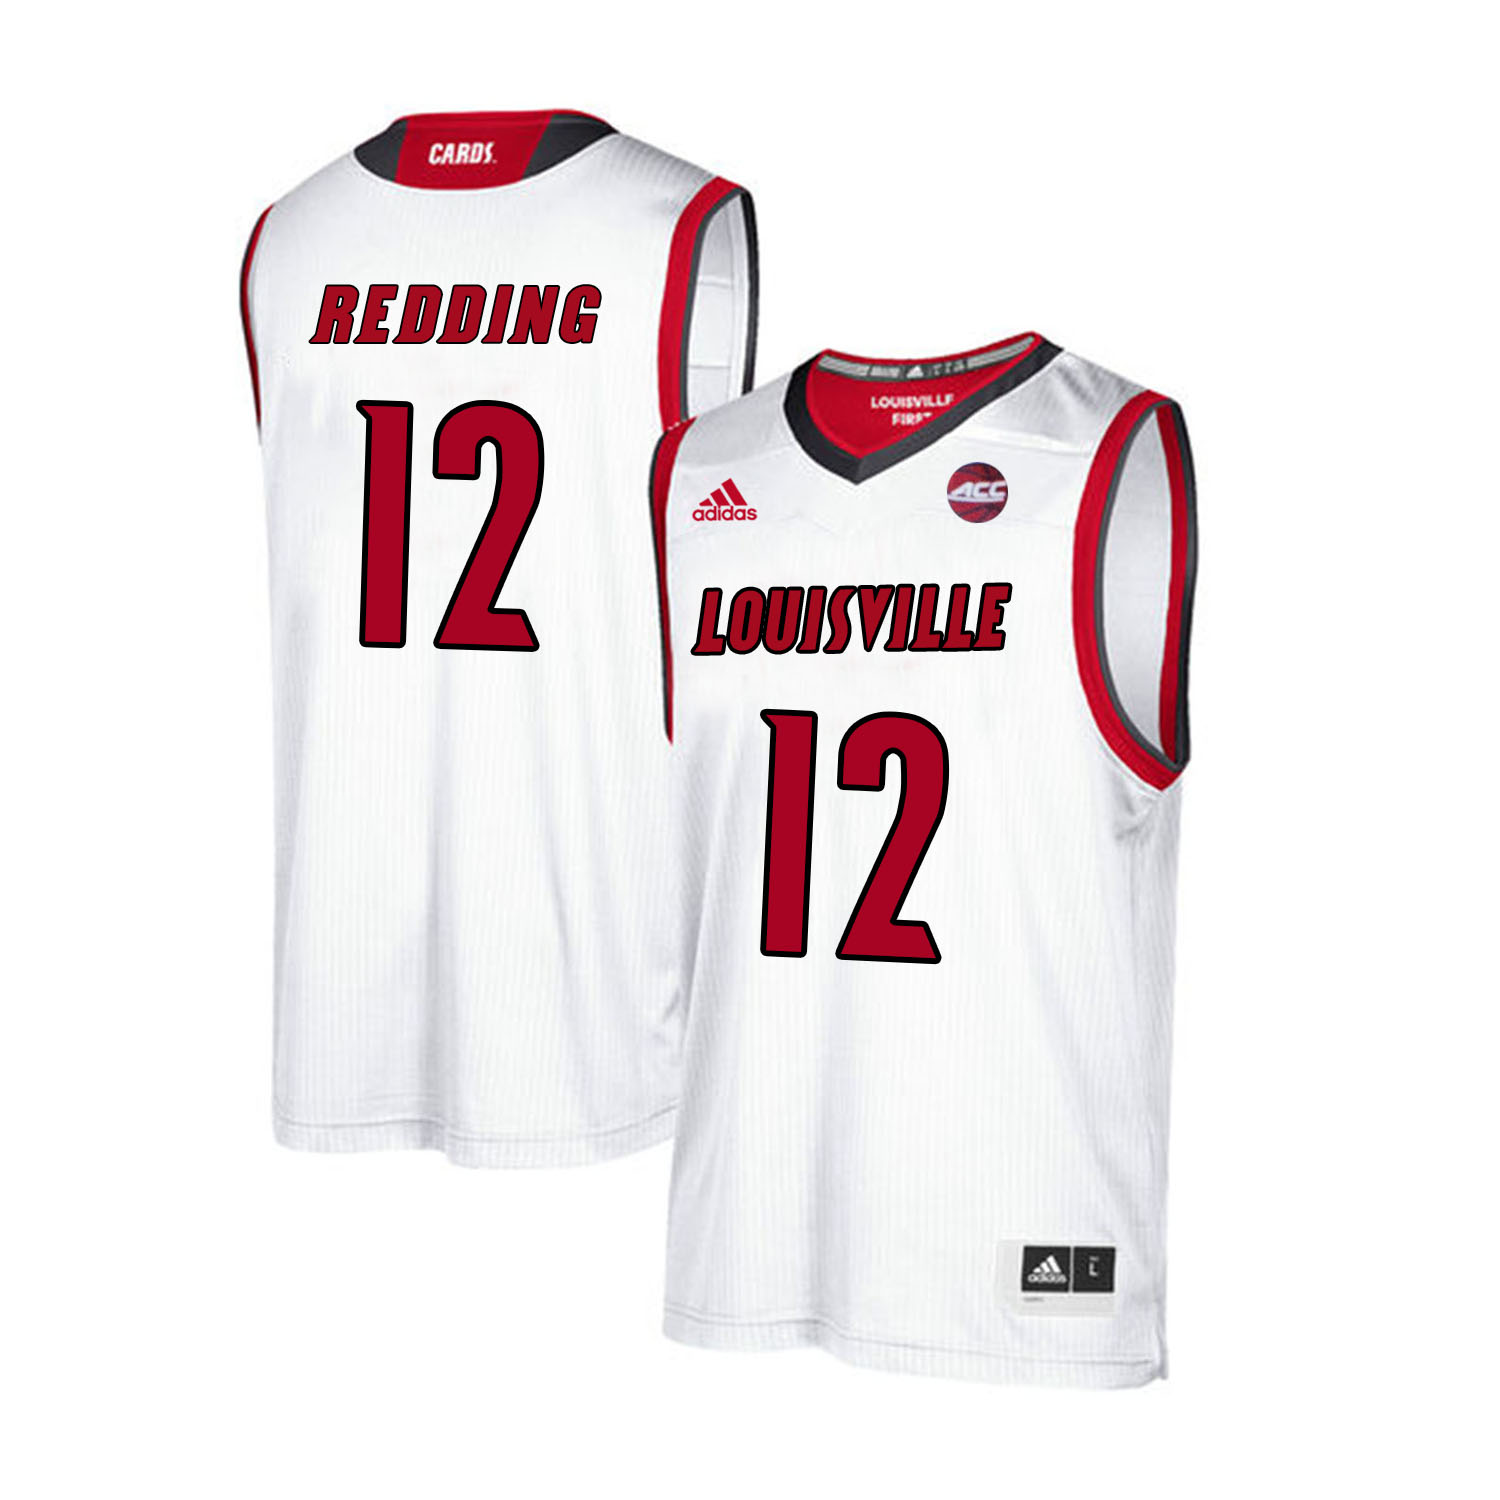 Louisville Cardinals 12 Jacob Redding White College Basketball Jersey